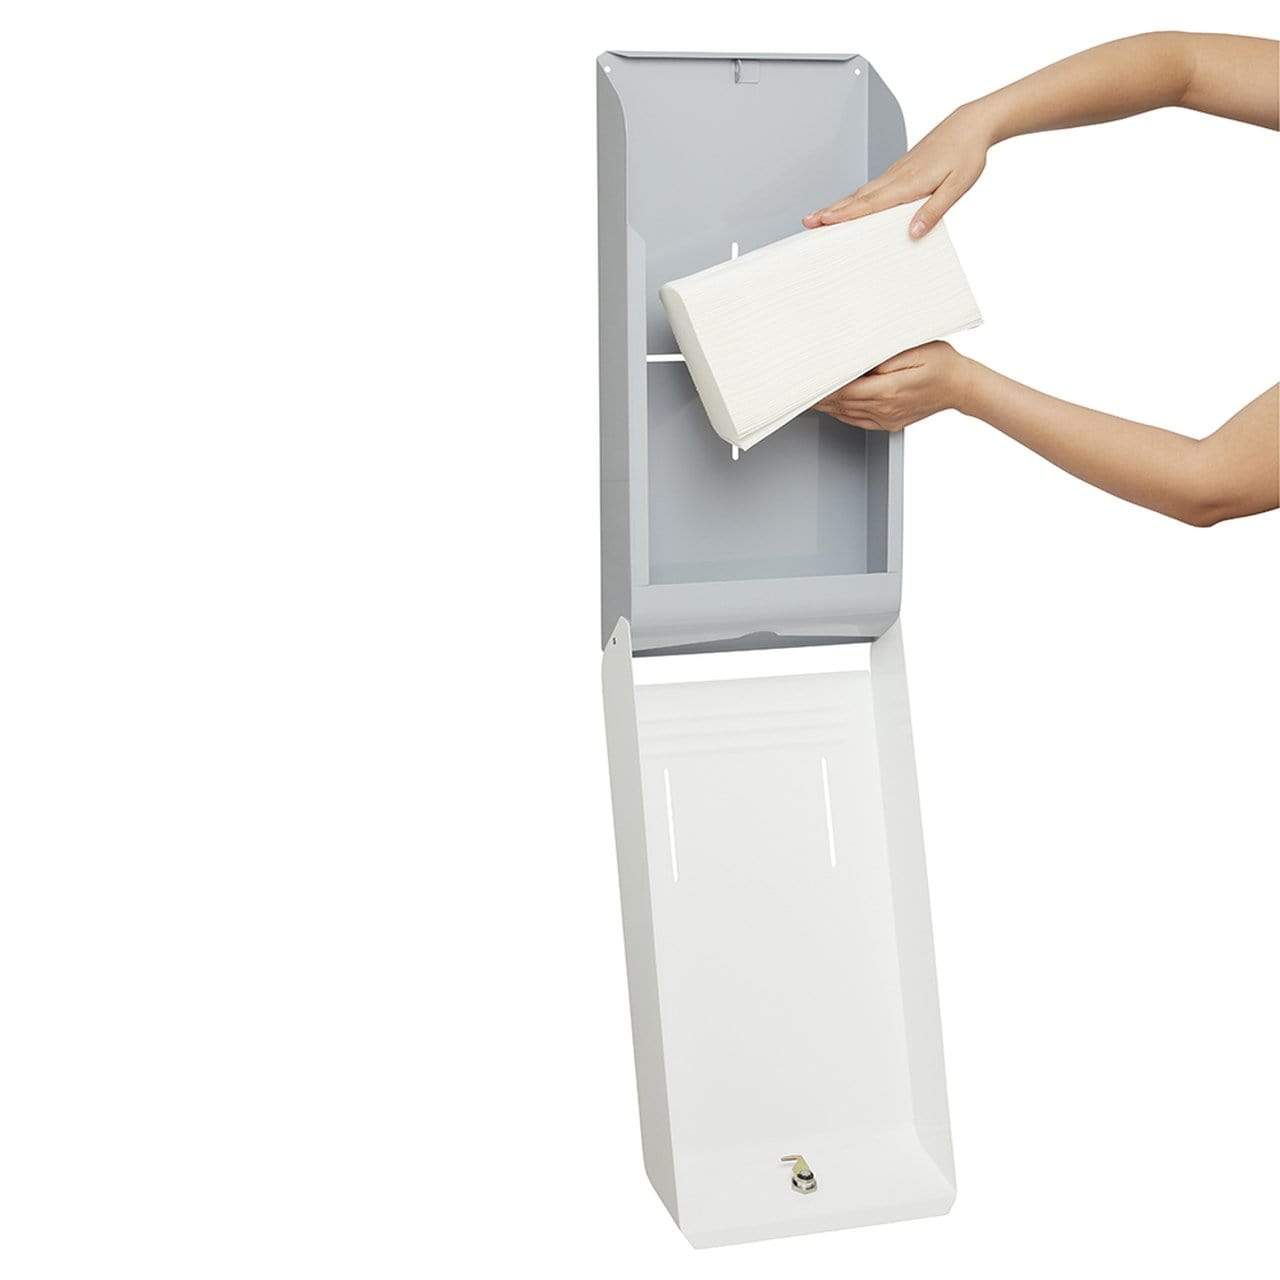 Kimberly-Clark Optimum Hand Towel Dispenser